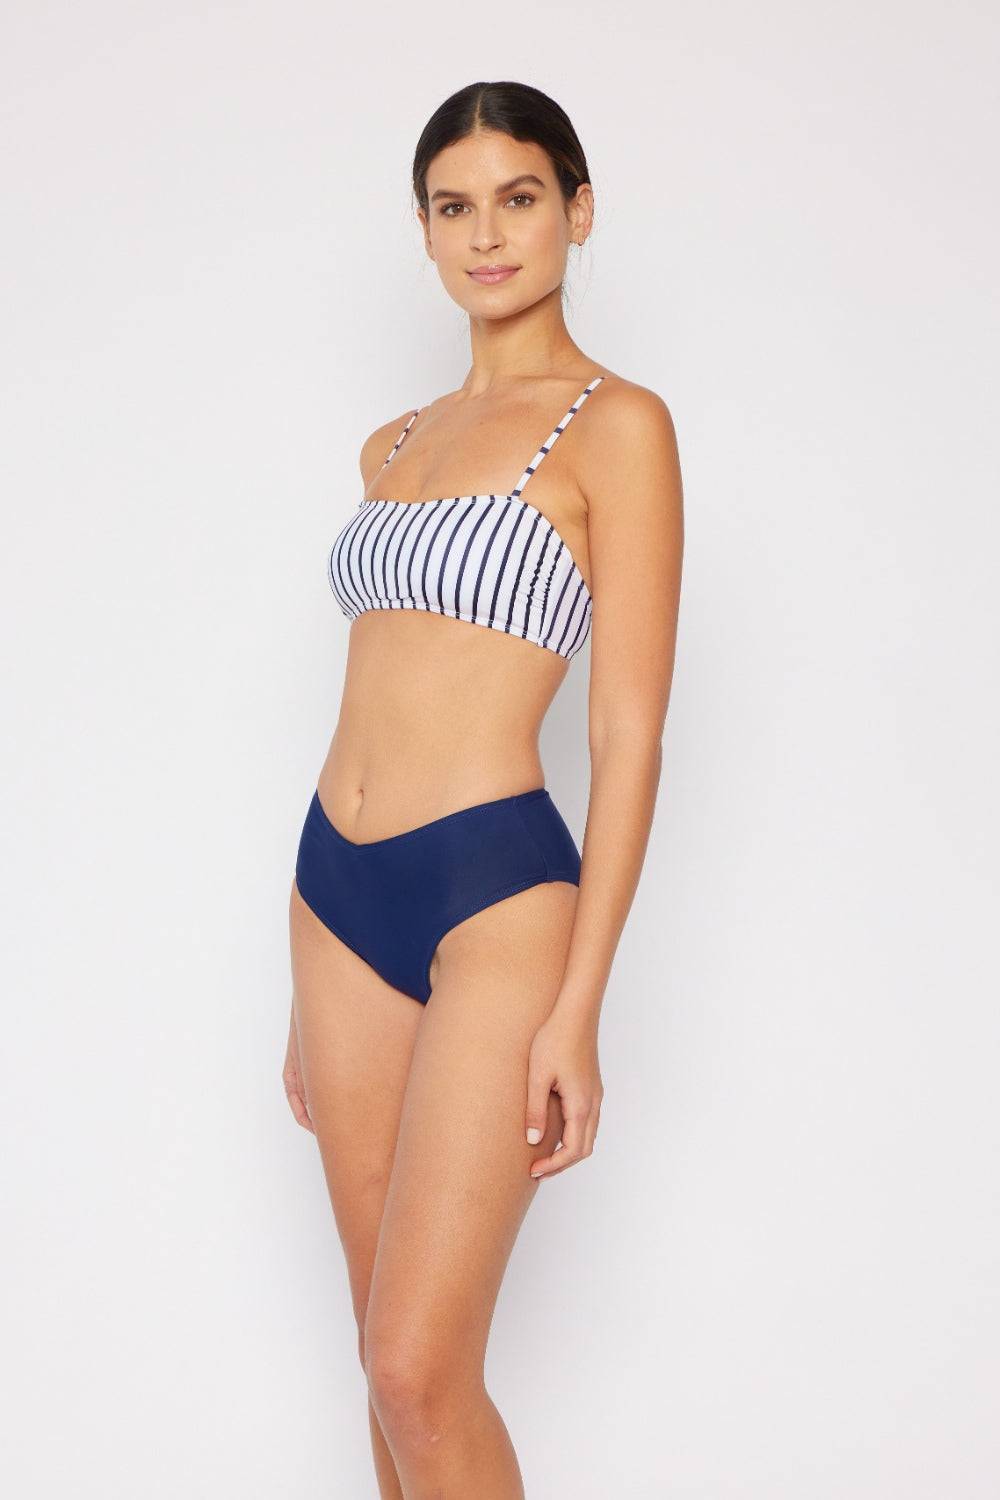 a woman wearing a bikini top and panties